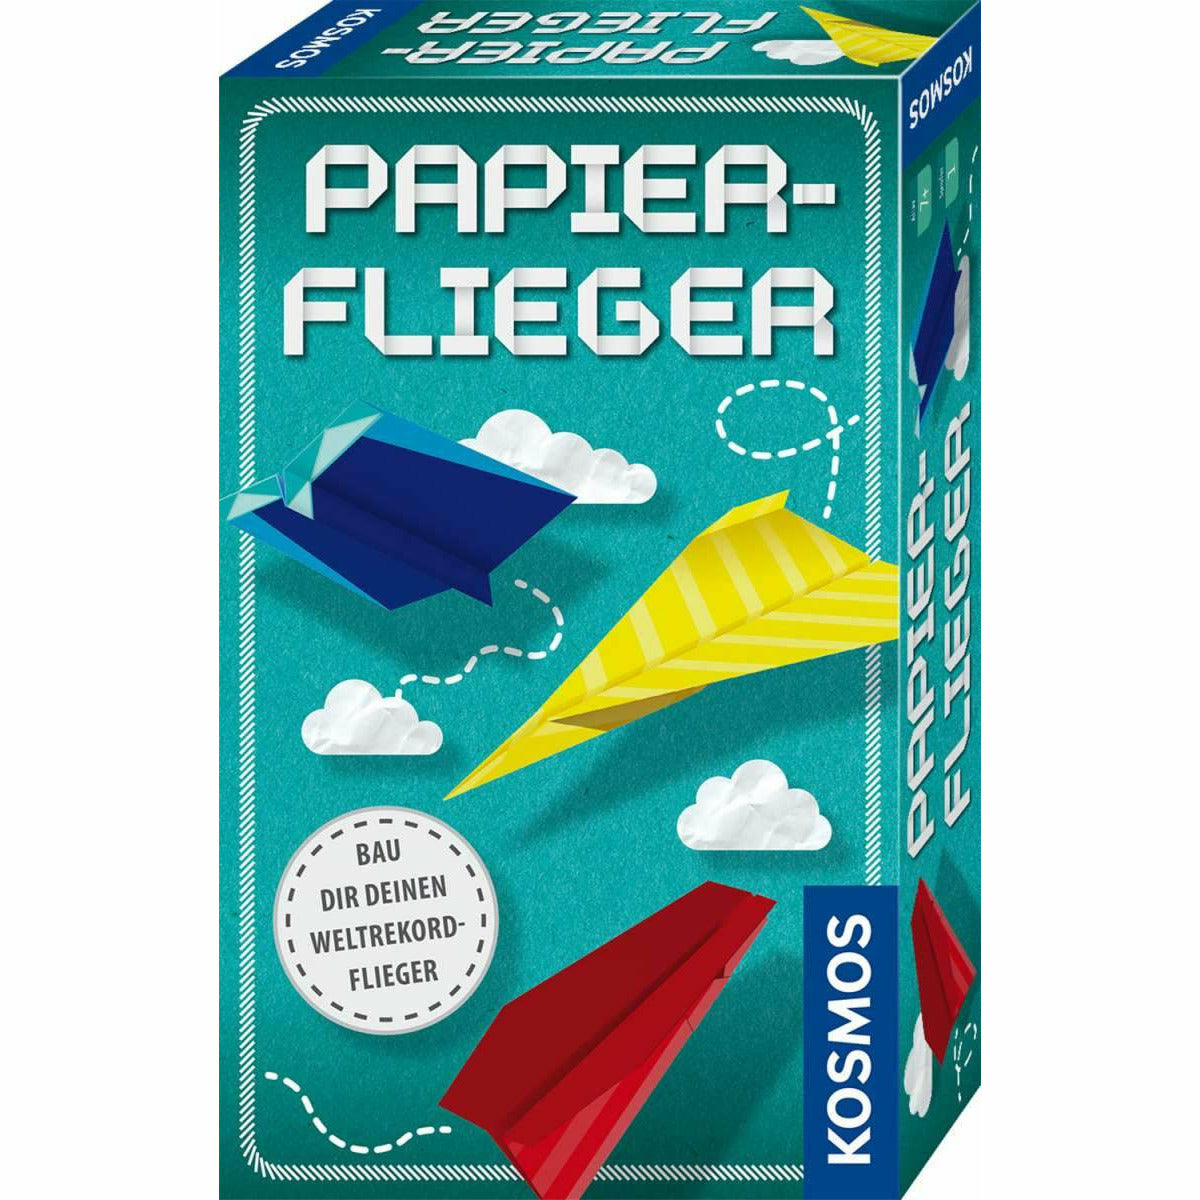 KOSMOS | Papier-Flieger